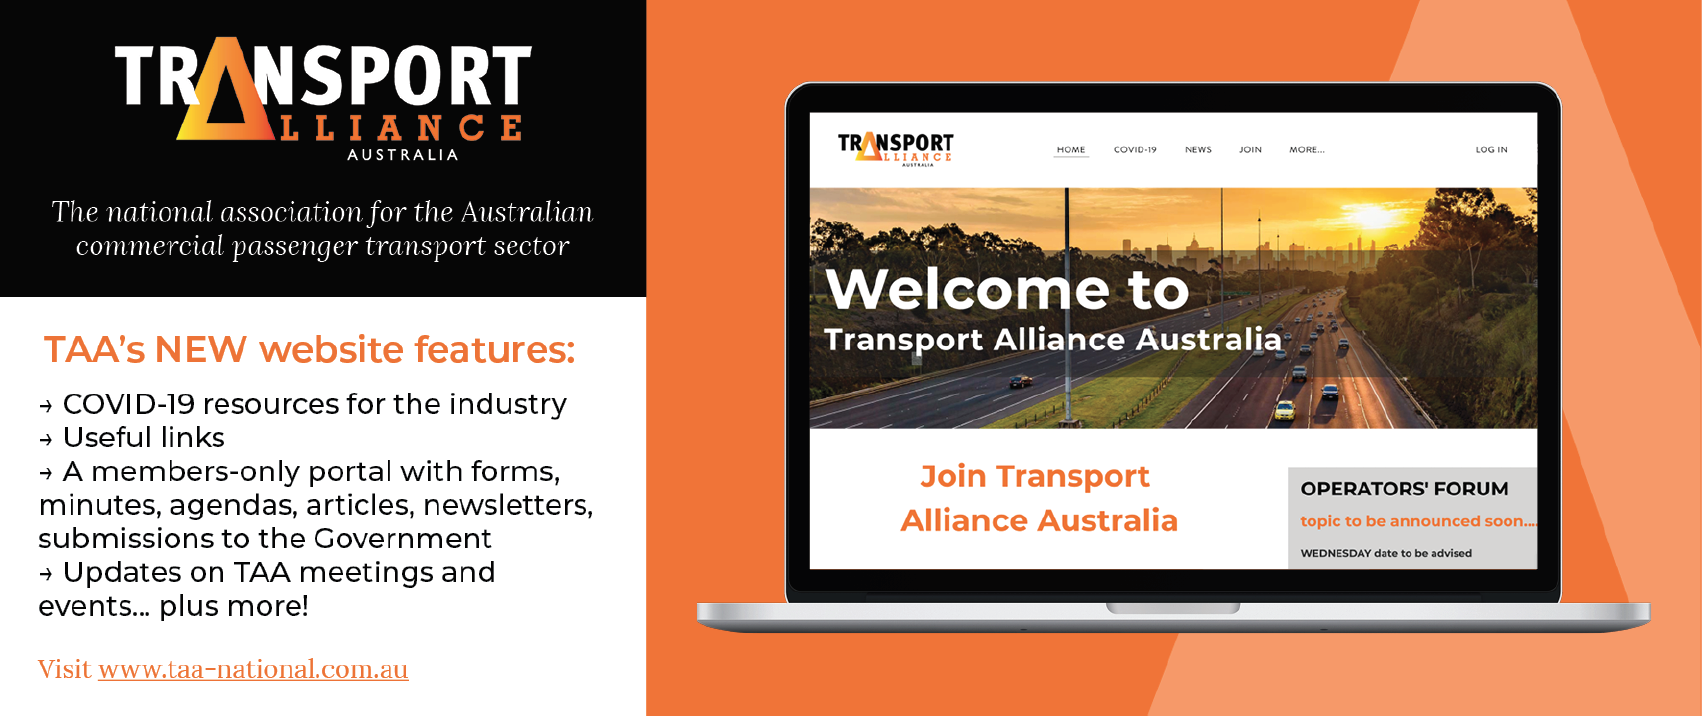 Transport Alliance Australia